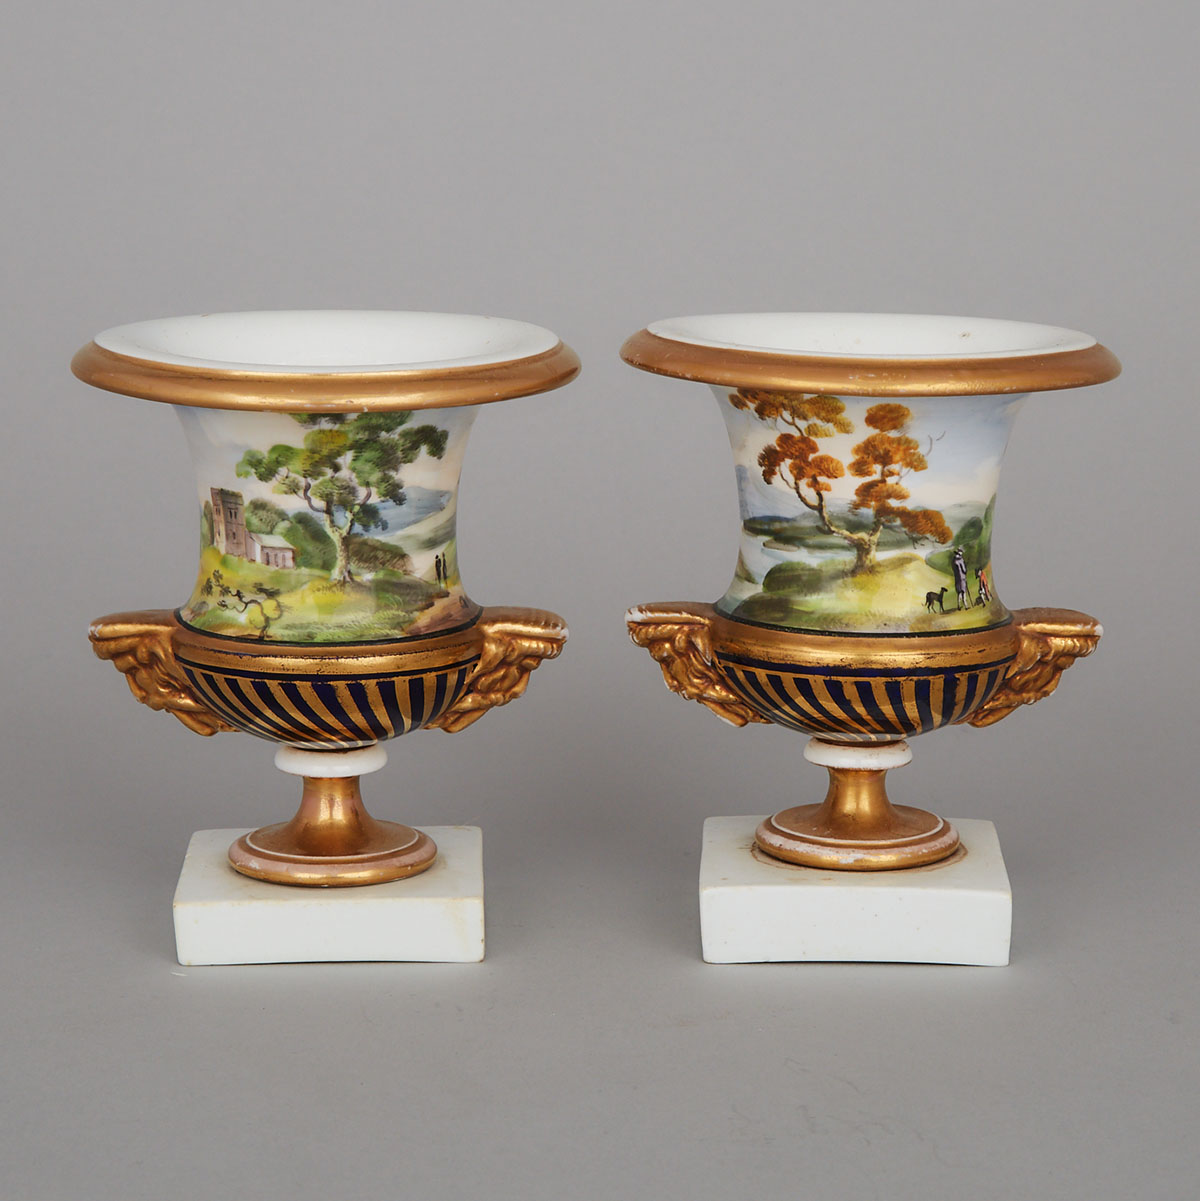 Pair of English Porcelain Small Campana Shaped Vases, c.1830